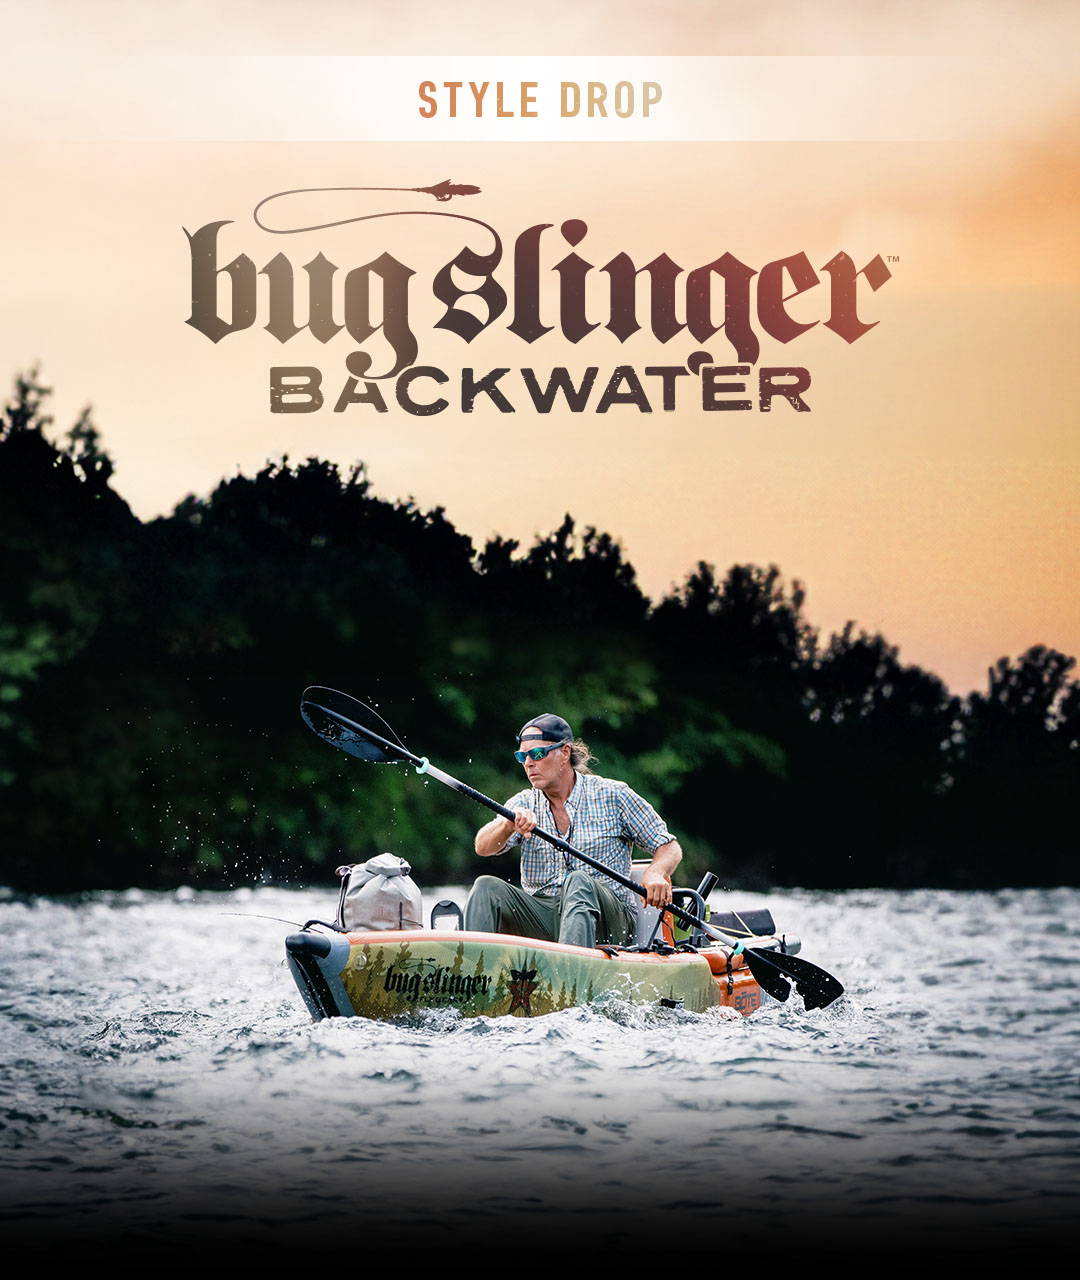 Guy on a Bug Slinger™ Backwater inflatable kayak